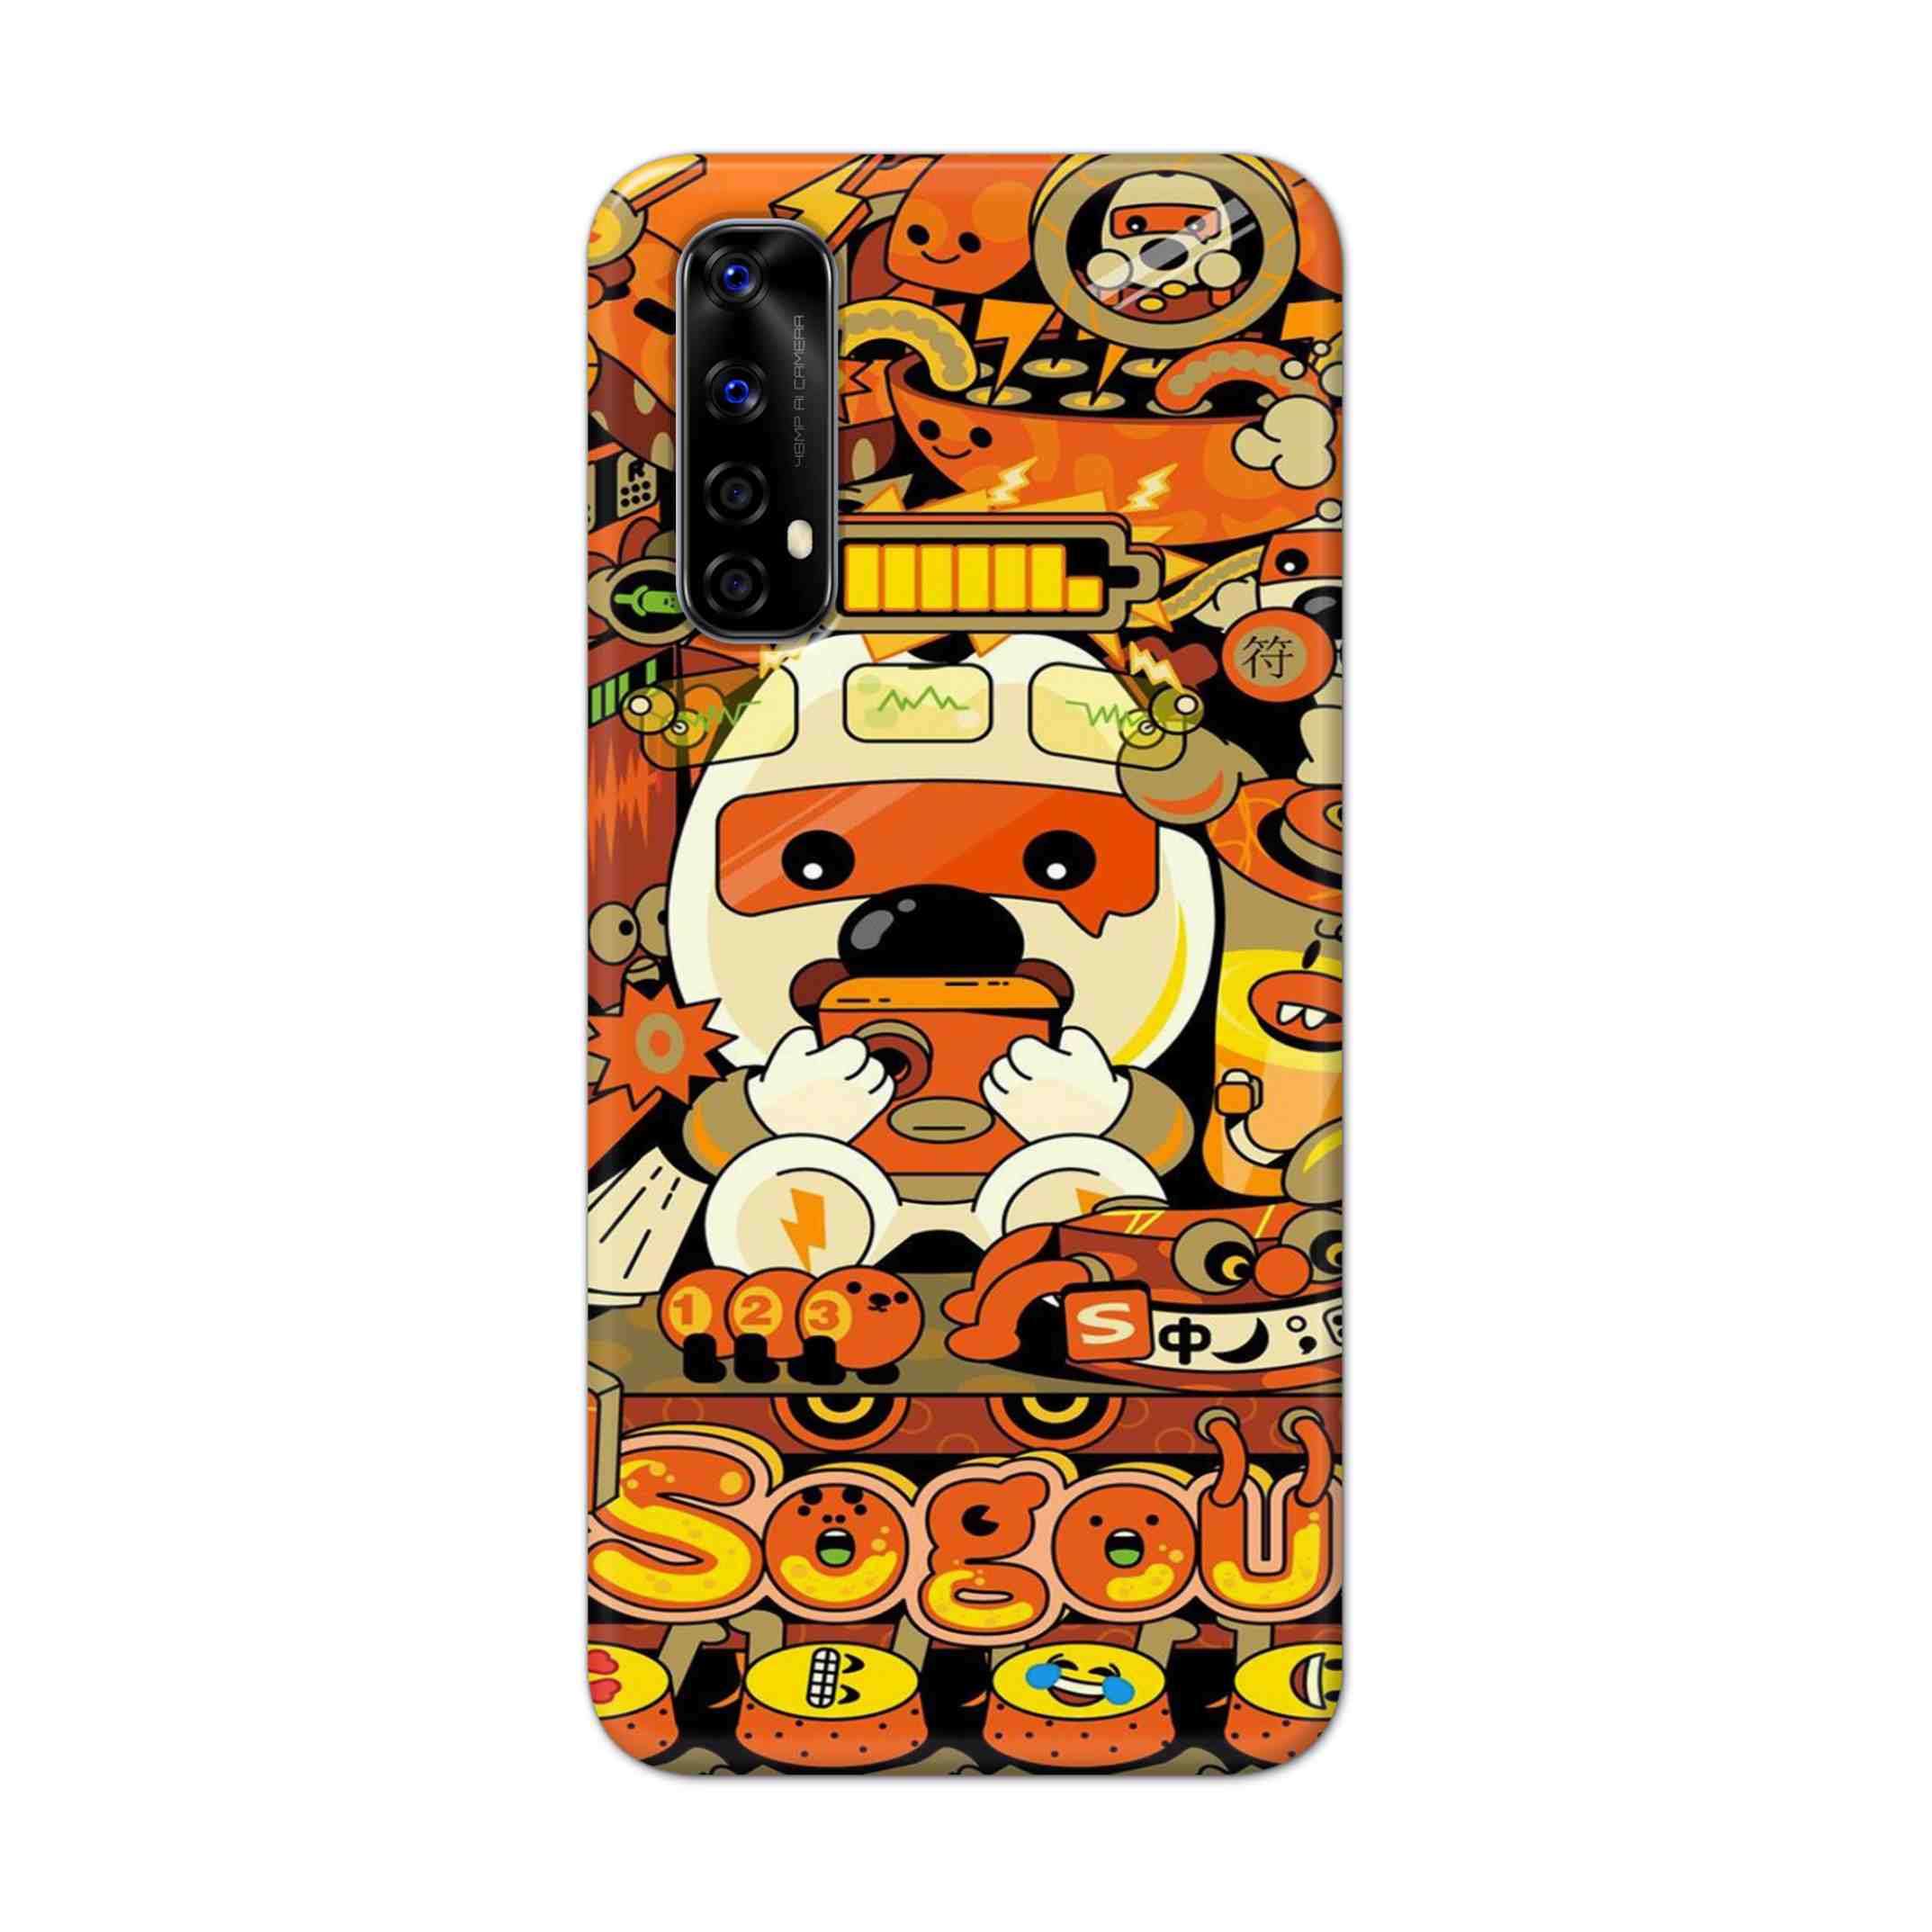 Buy Sogou Hard Back Mobile Phone Case Cover For Realme Narzo 20 Pro Online